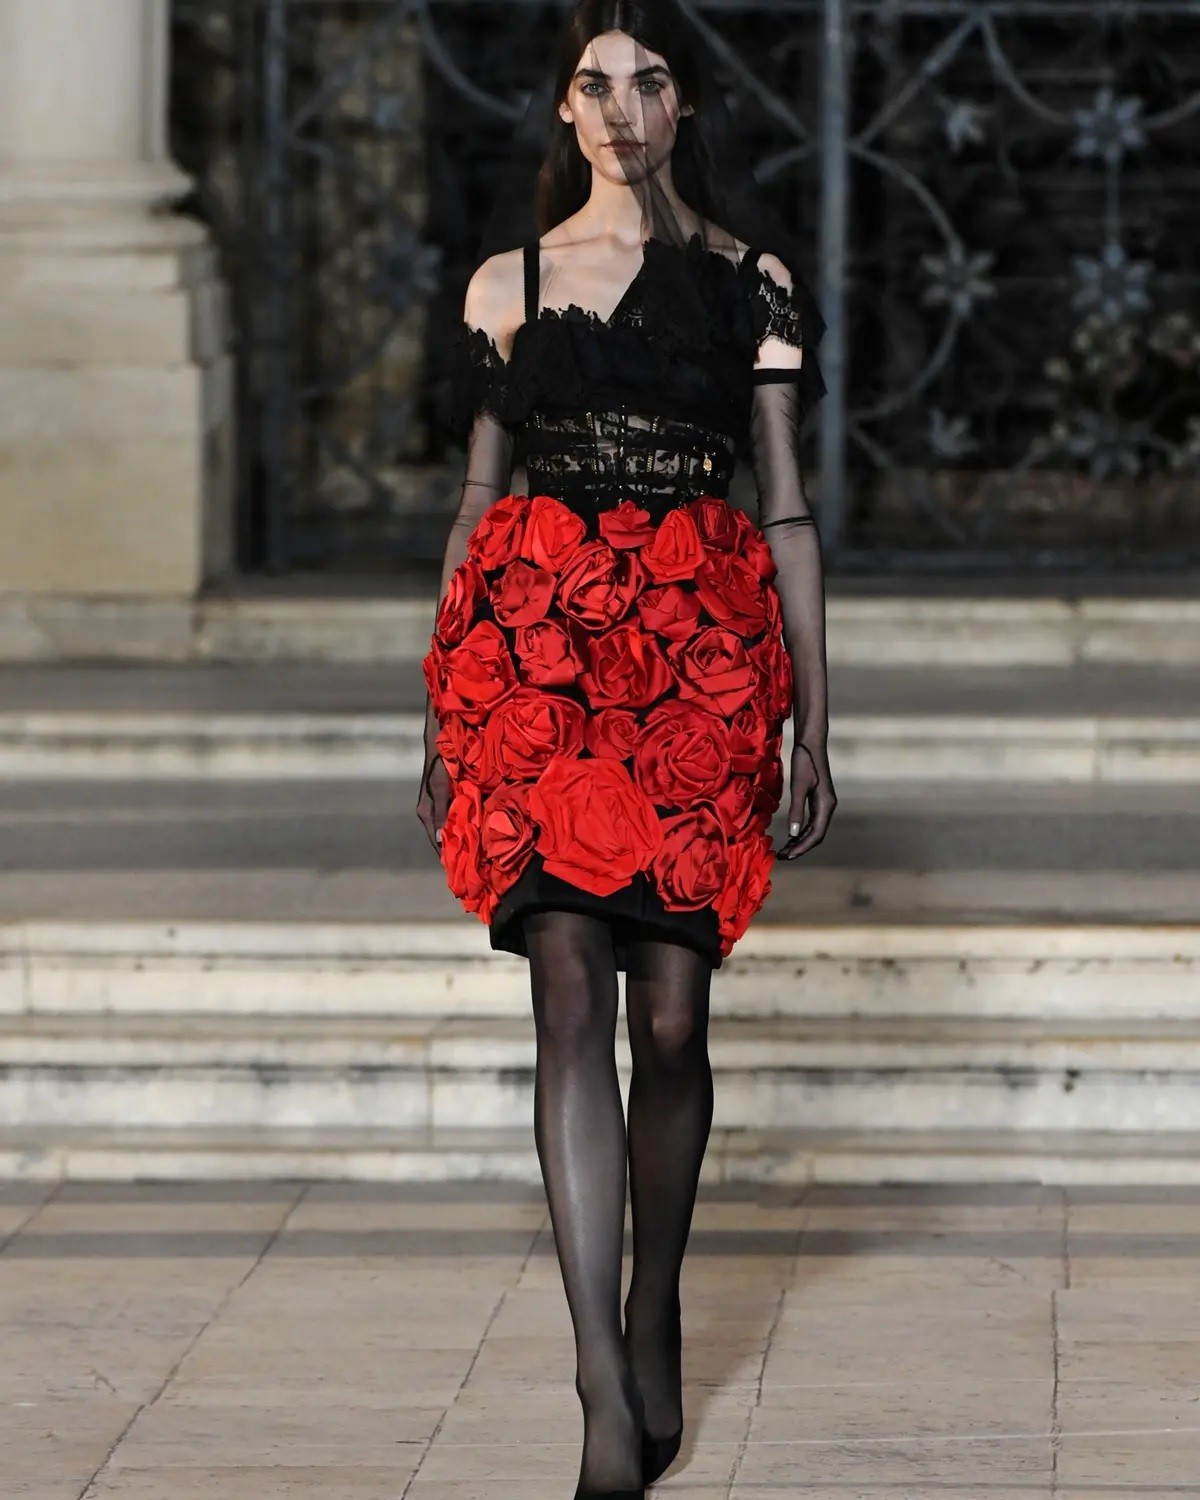 Rosas 3D são tendência (Foto: Dolce Gabbana)